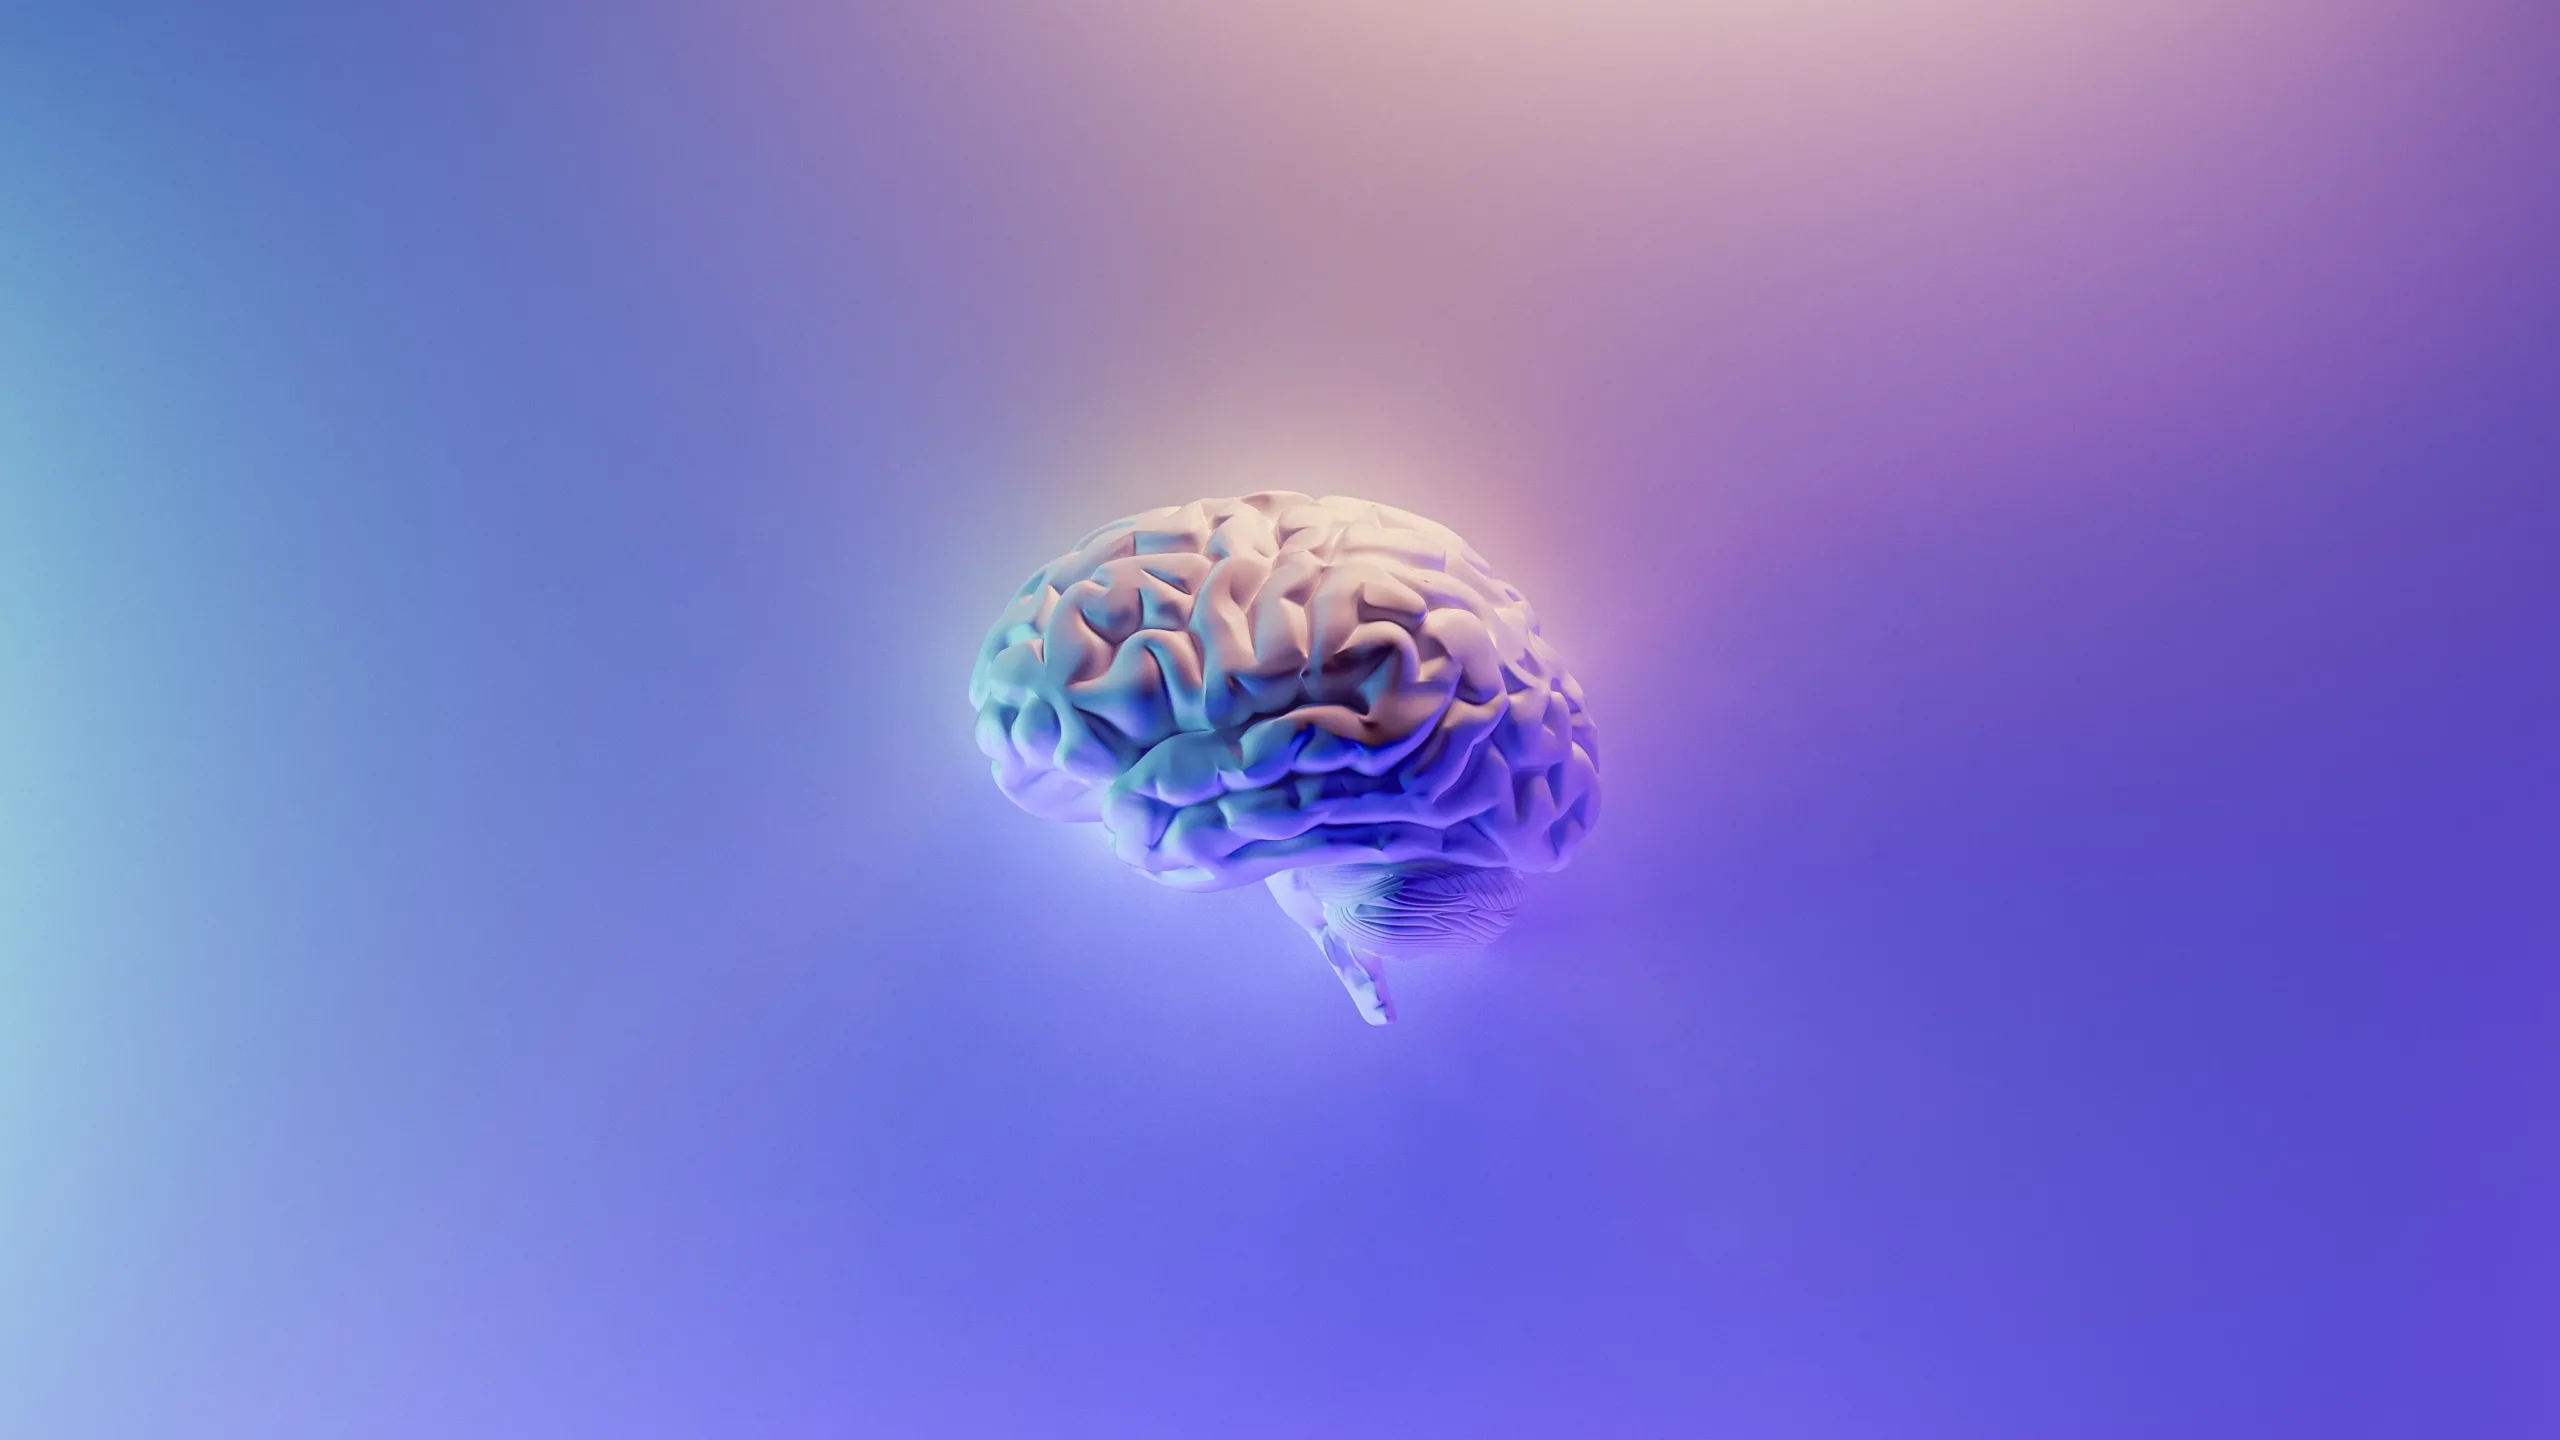 artistic rendering of a brain